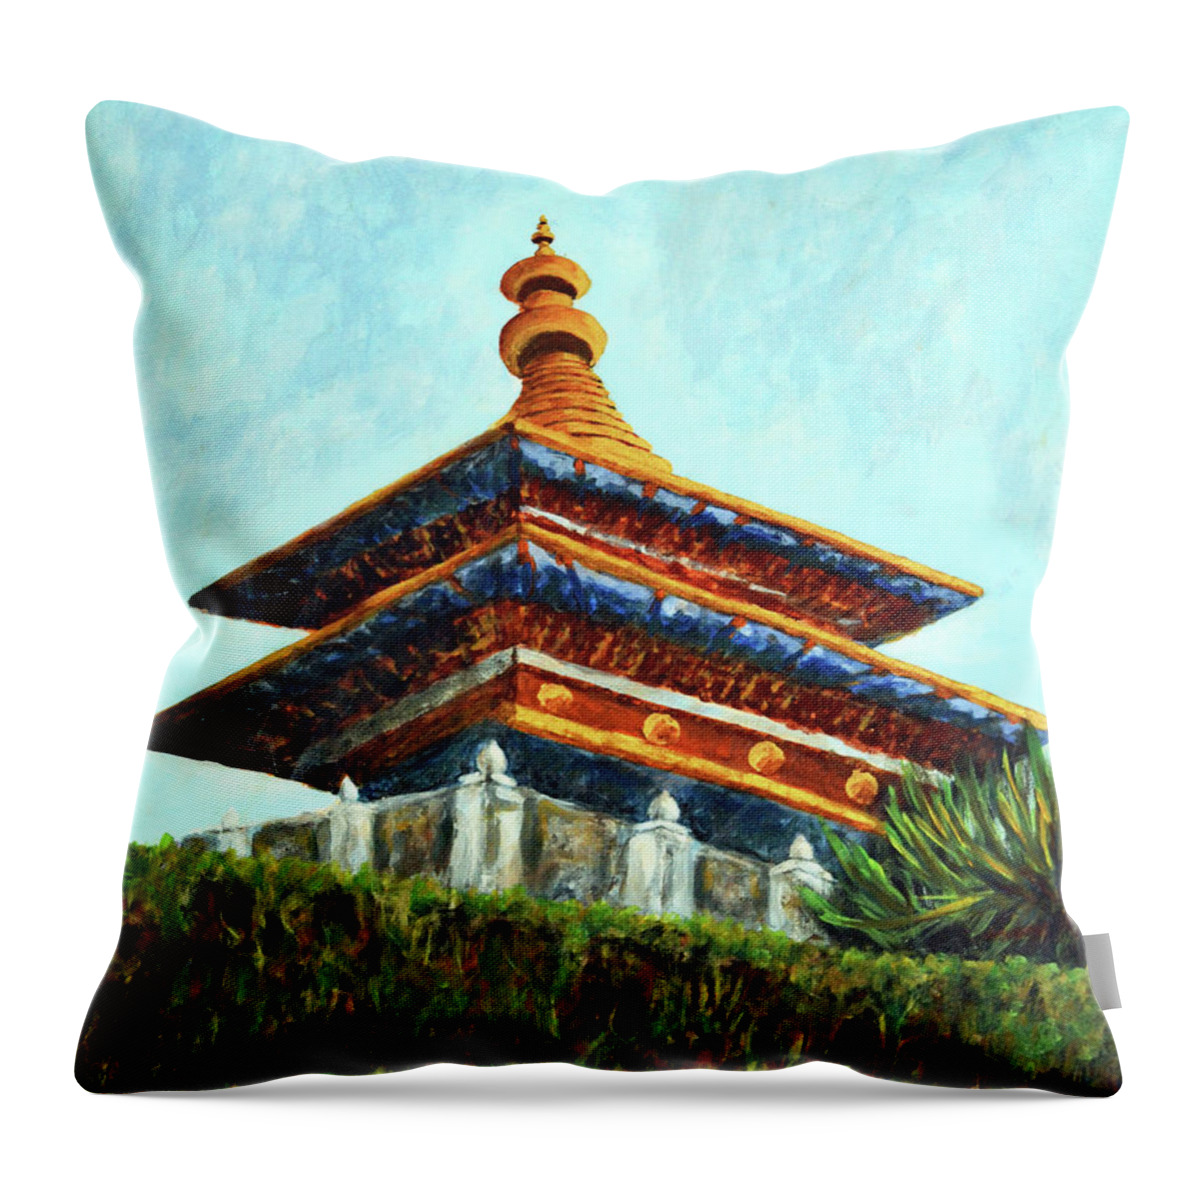 Bhutan Series Throw Pillow featuring the painting Bhutan series - Architecture by Uma Krishnamoorthy